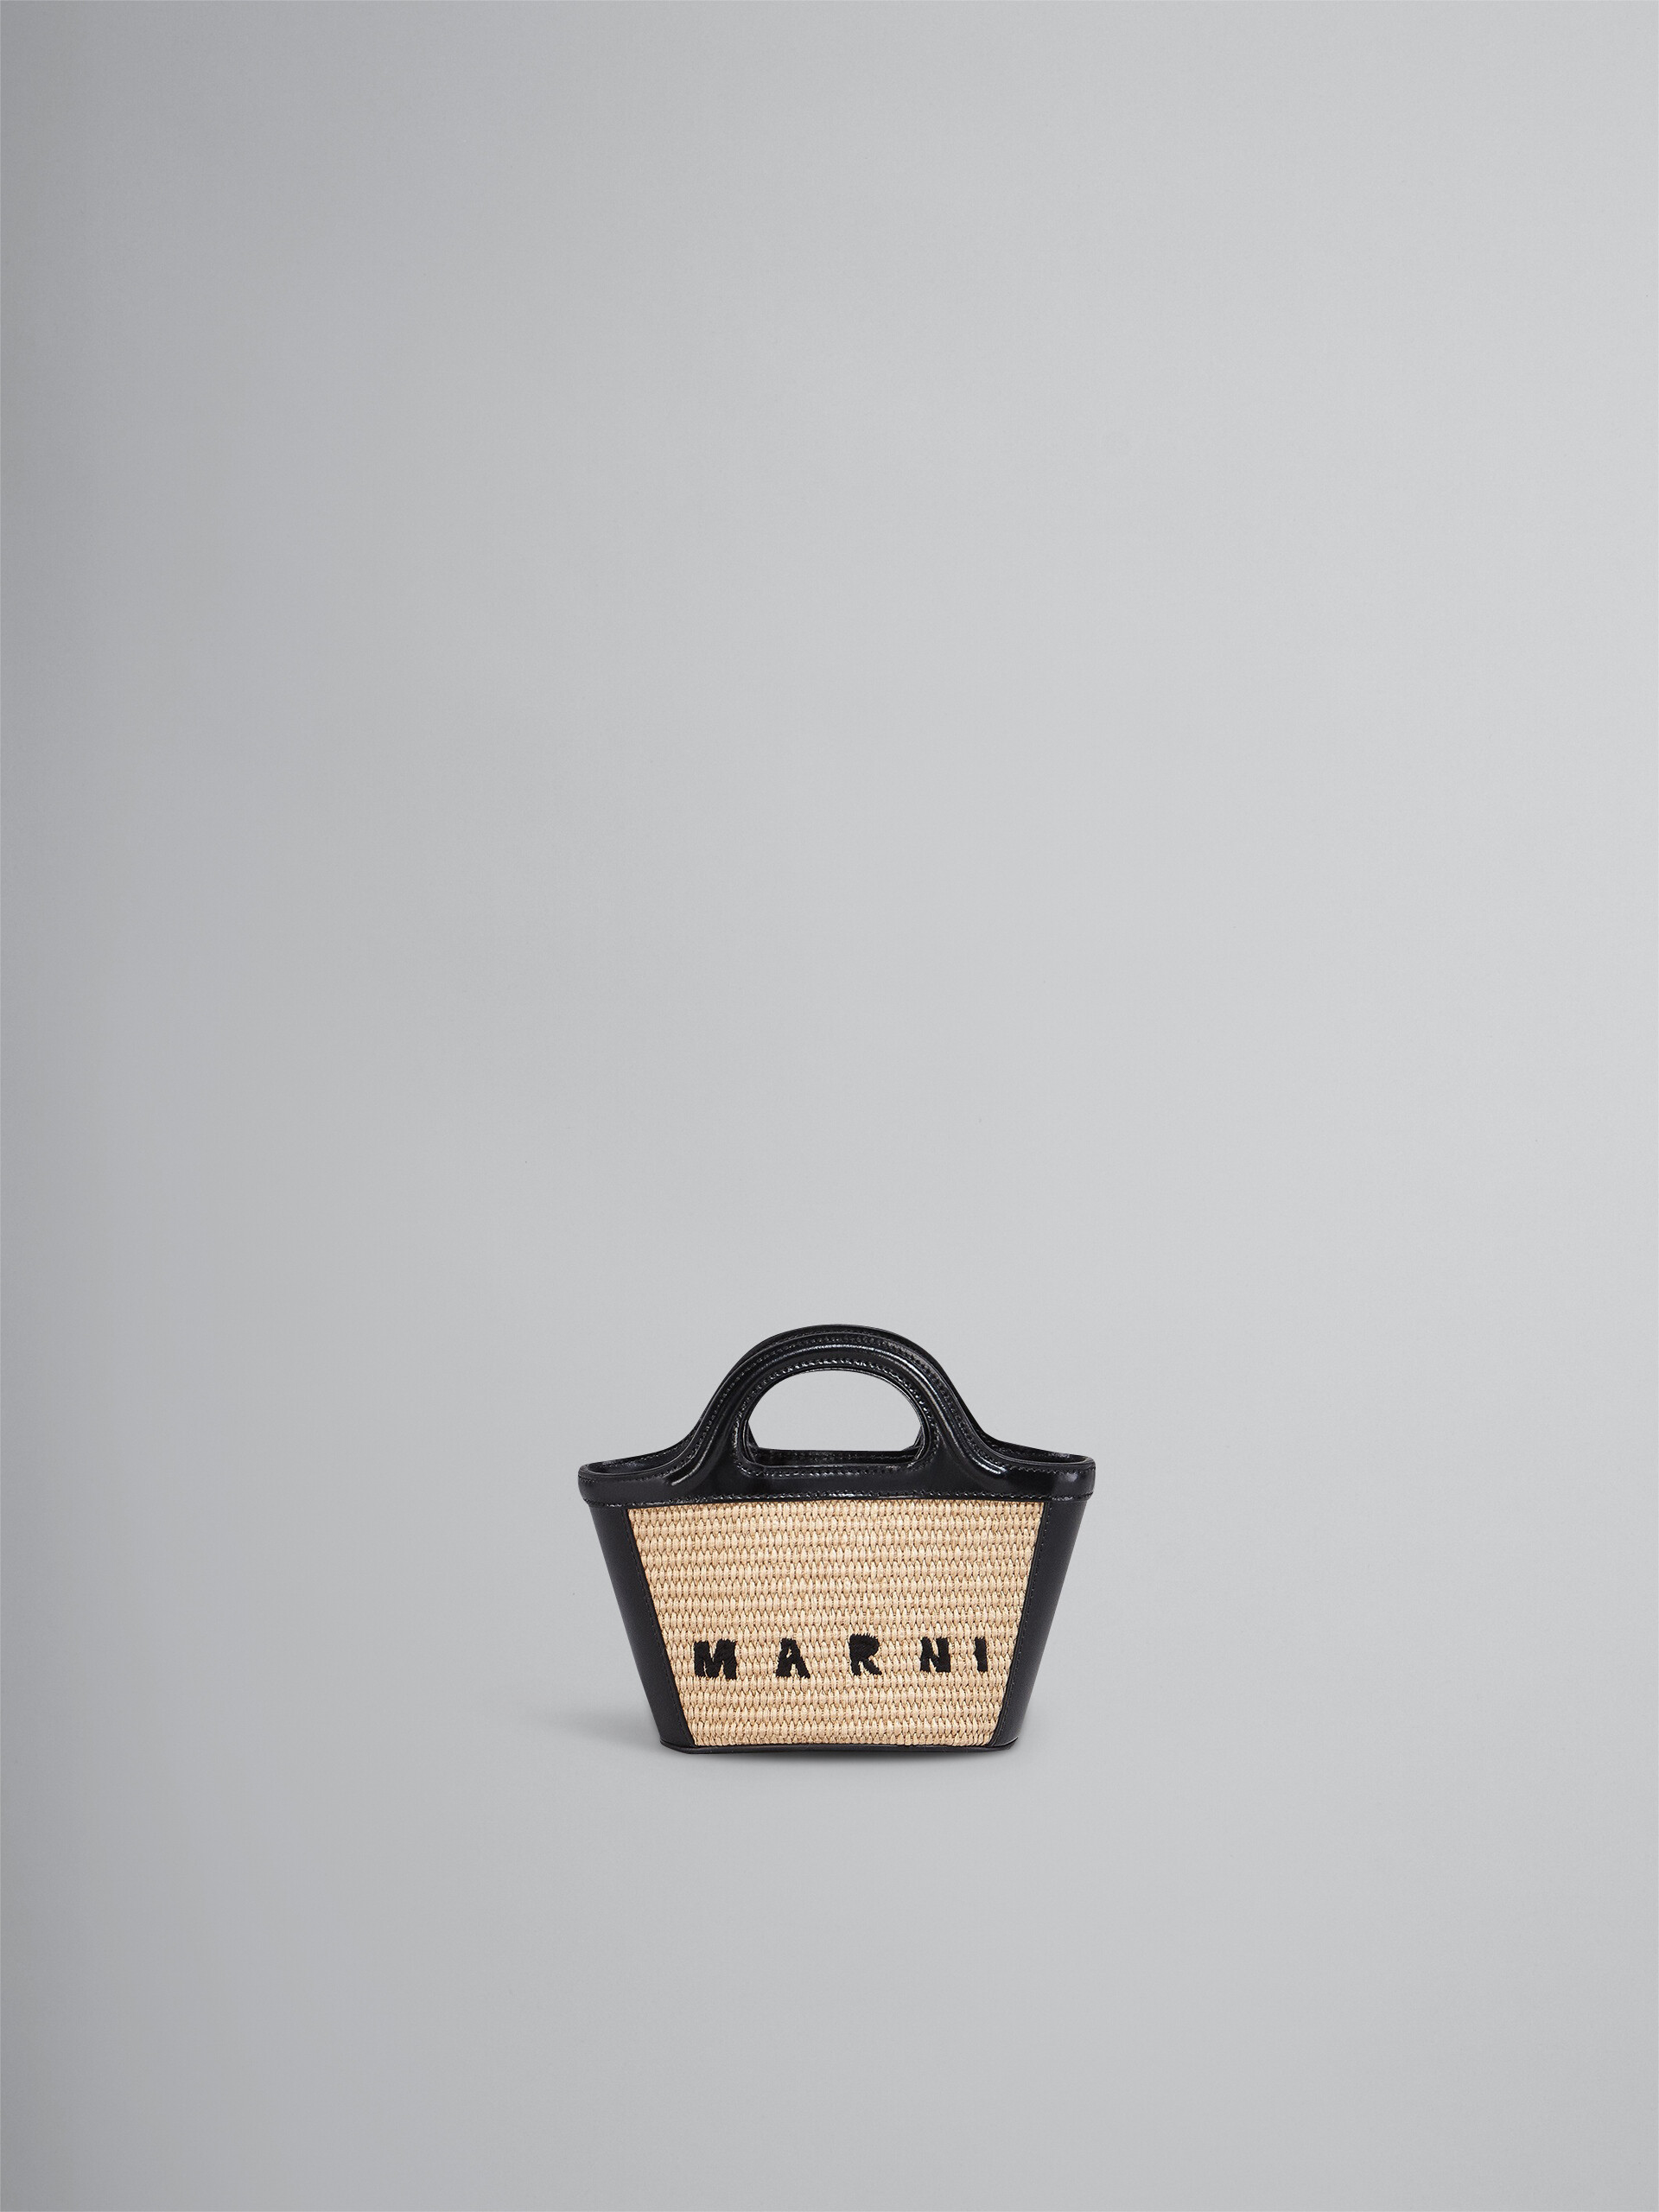 Black leather and raffia micro TROPICALIA SUMMER bag - Handbag - Image 1